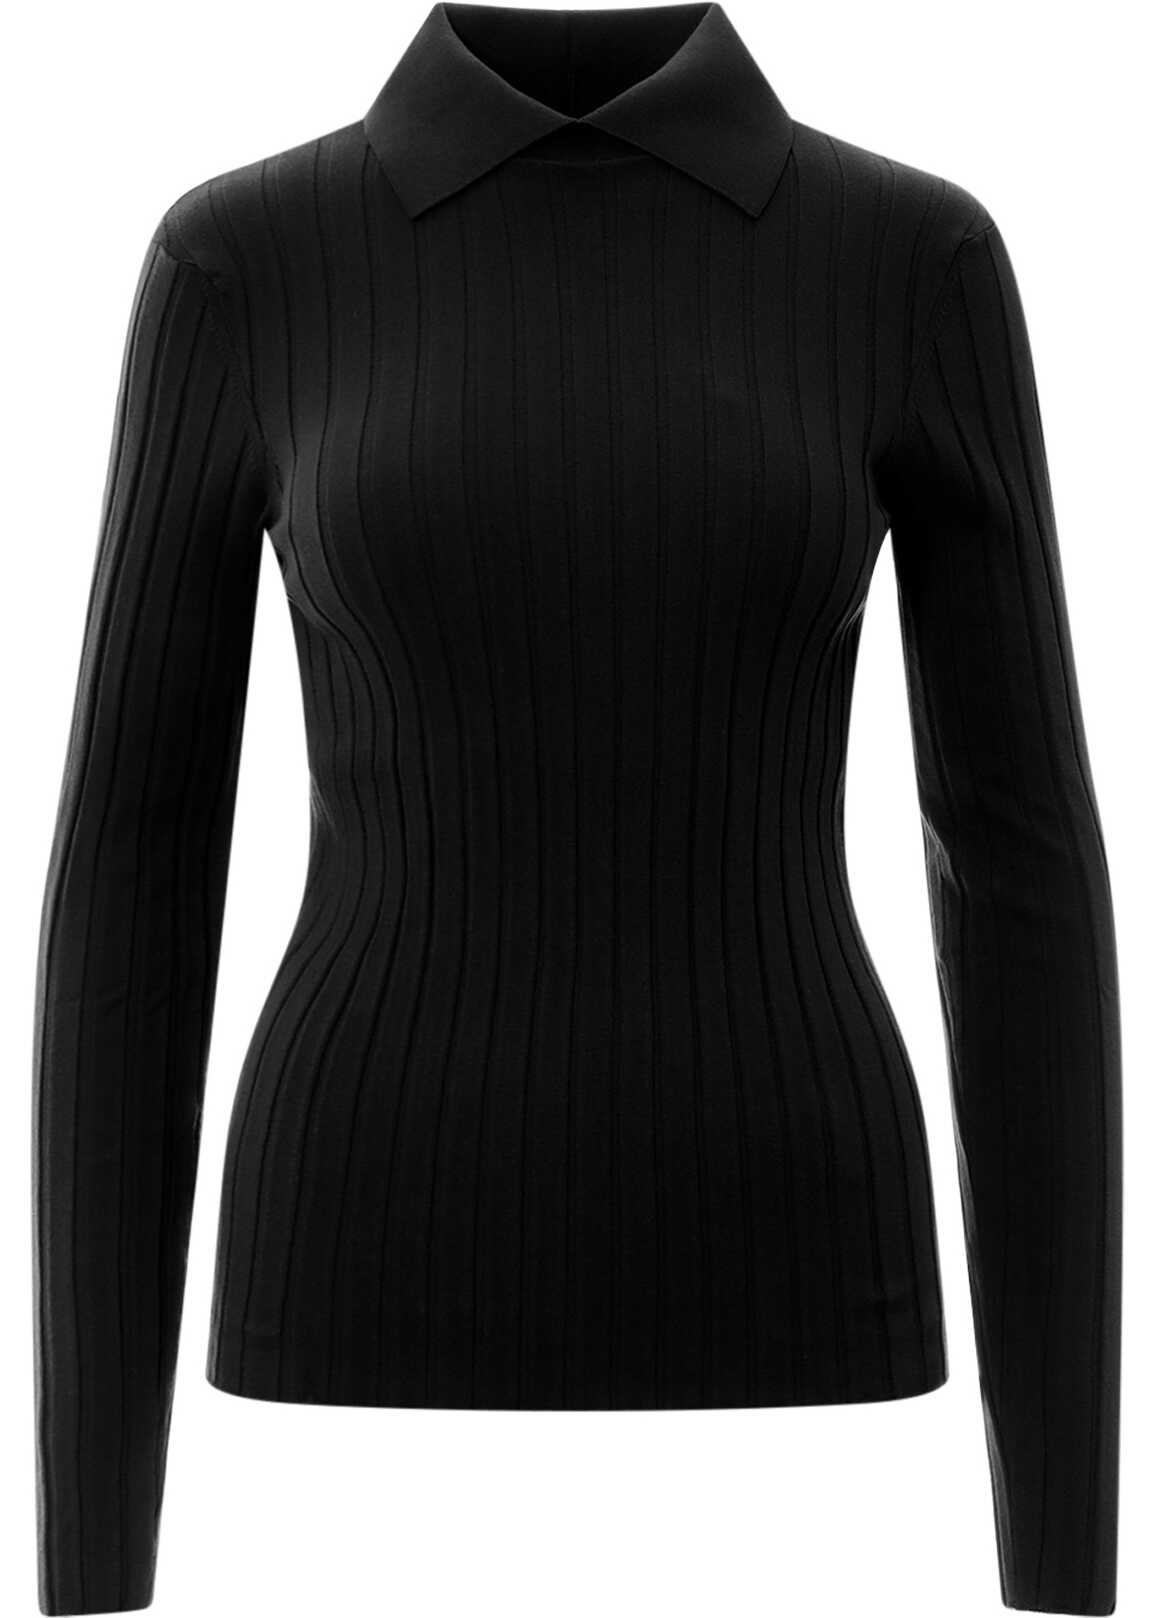 Erika Cavallini Sweater Black